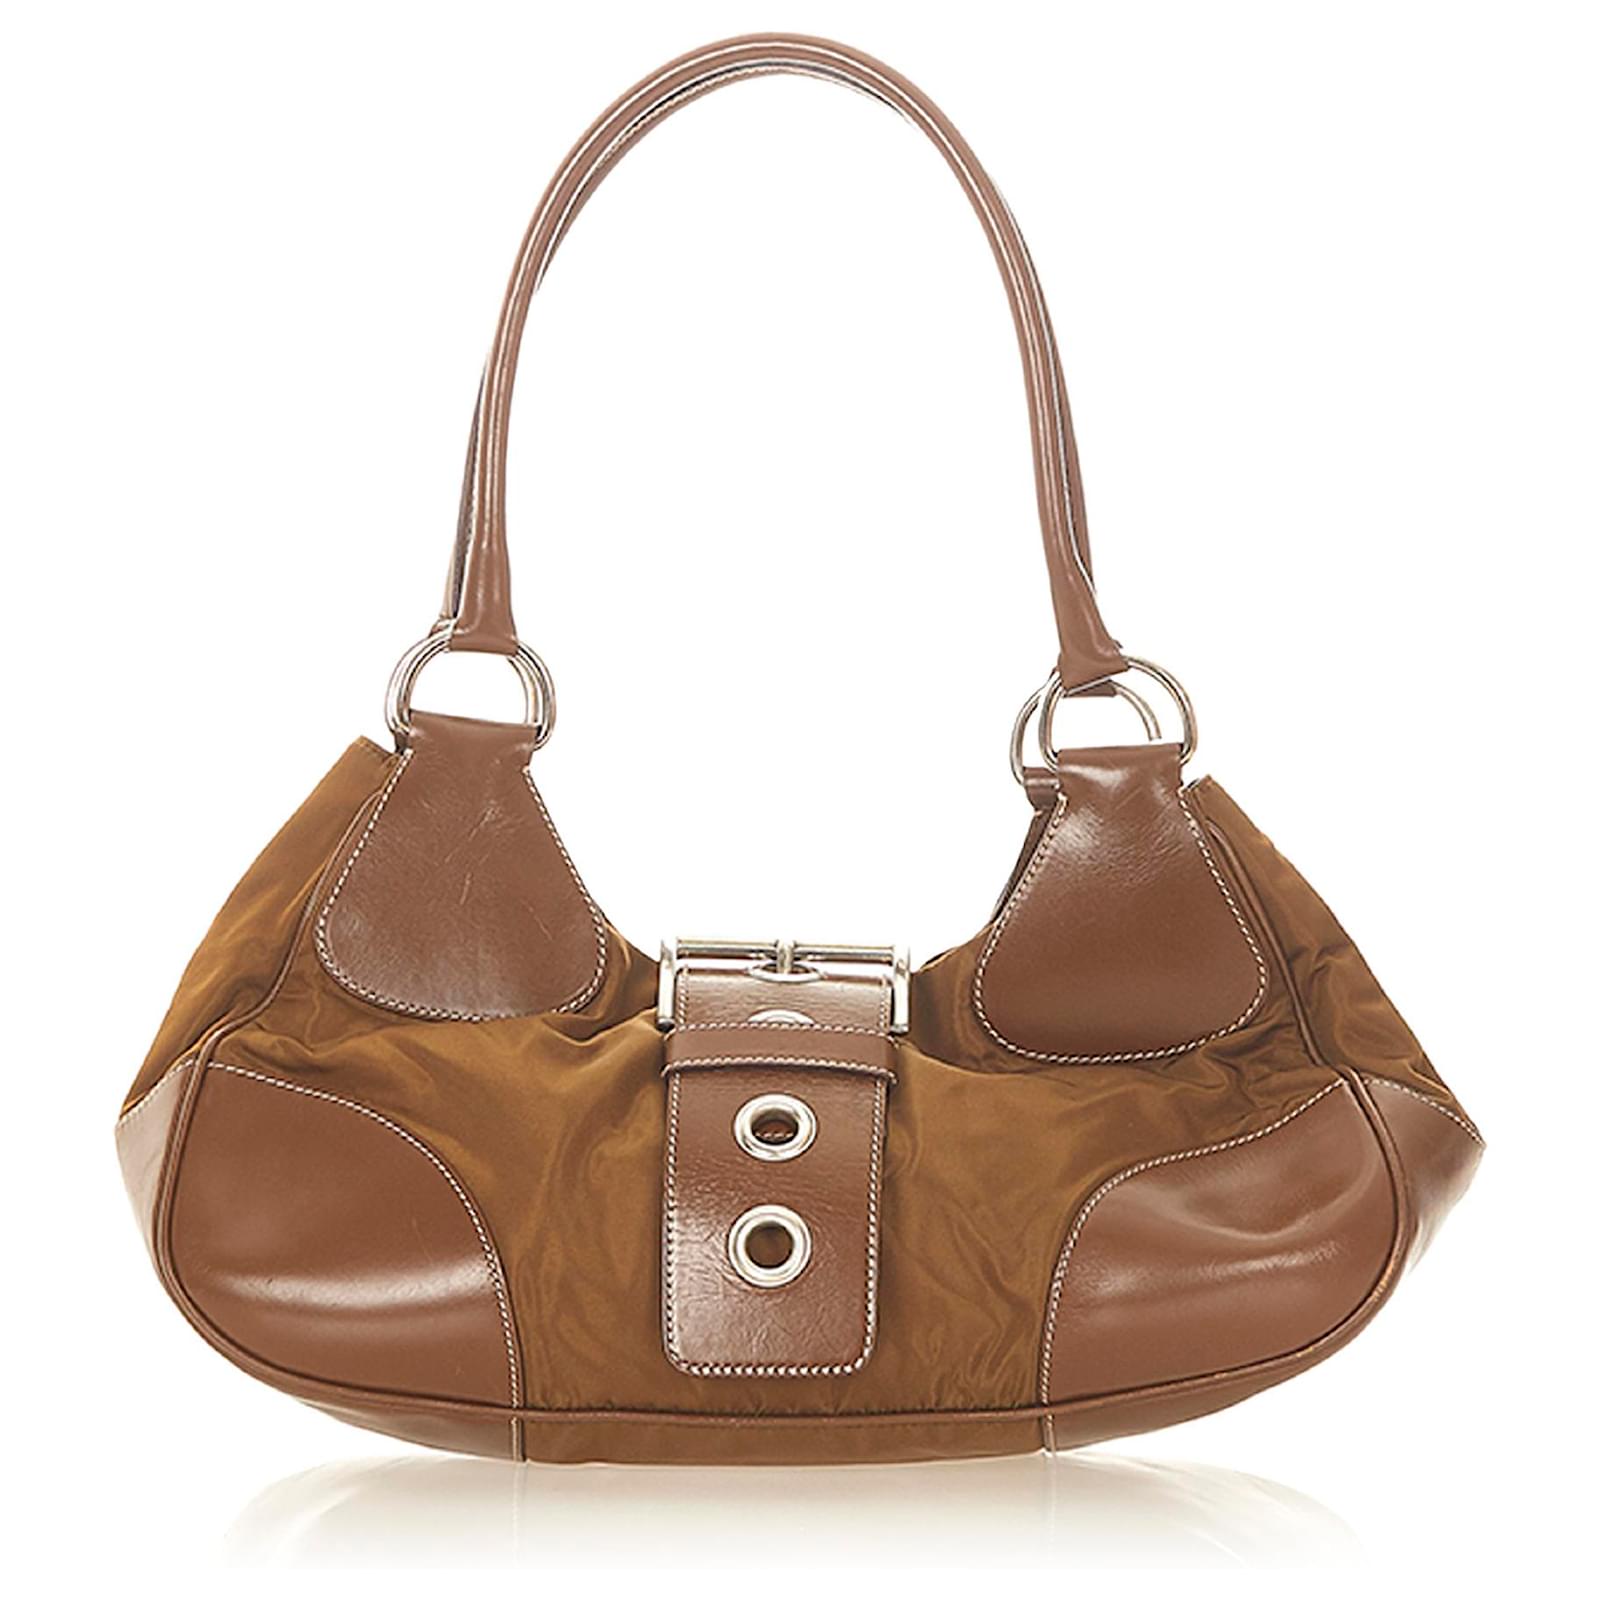 Prada Hobo Shoulder Bag in Brown